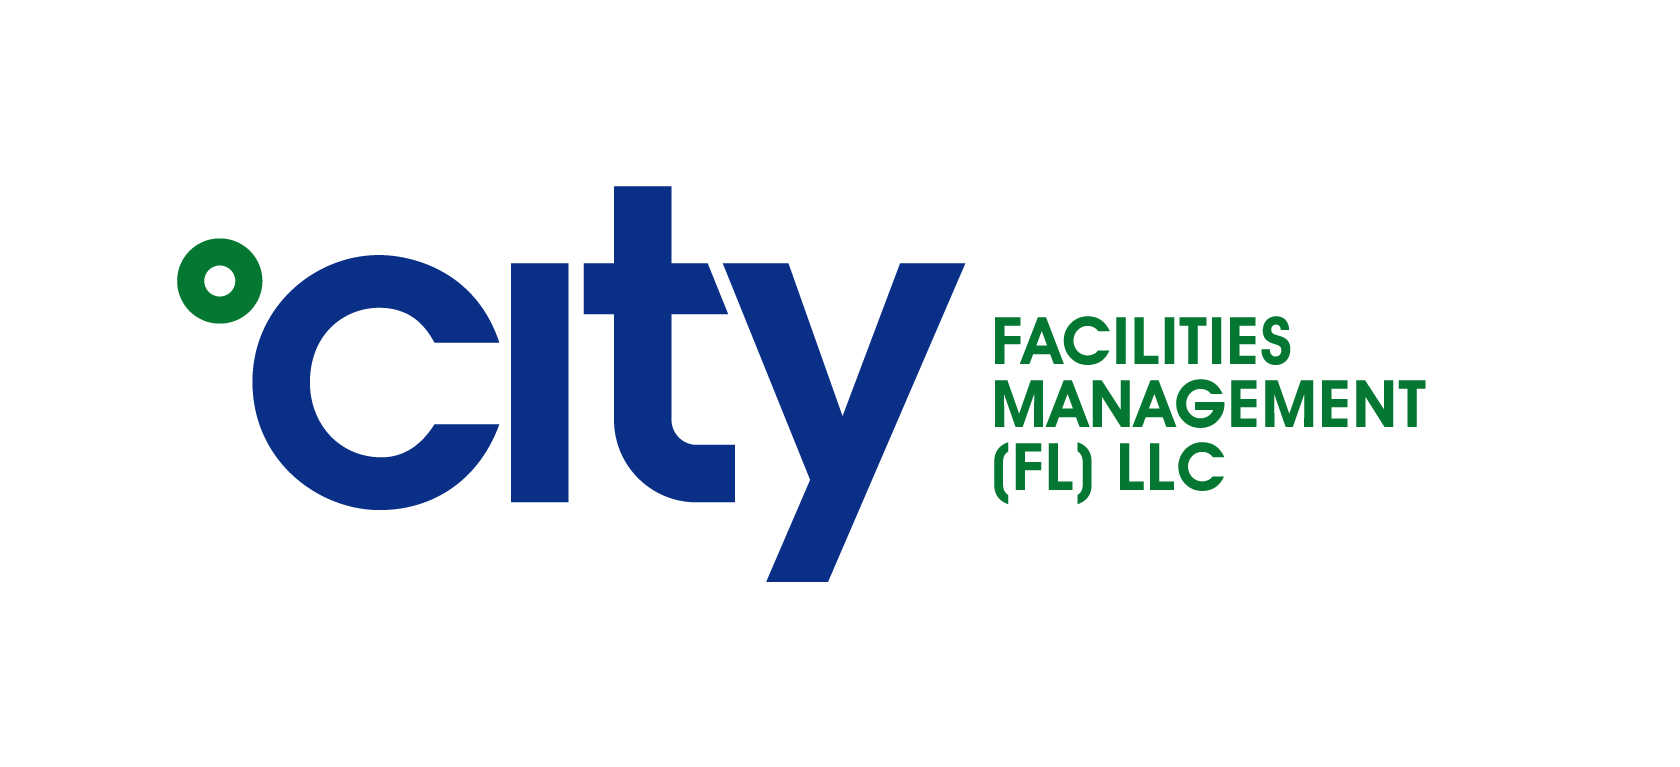 City-Facilities-Management